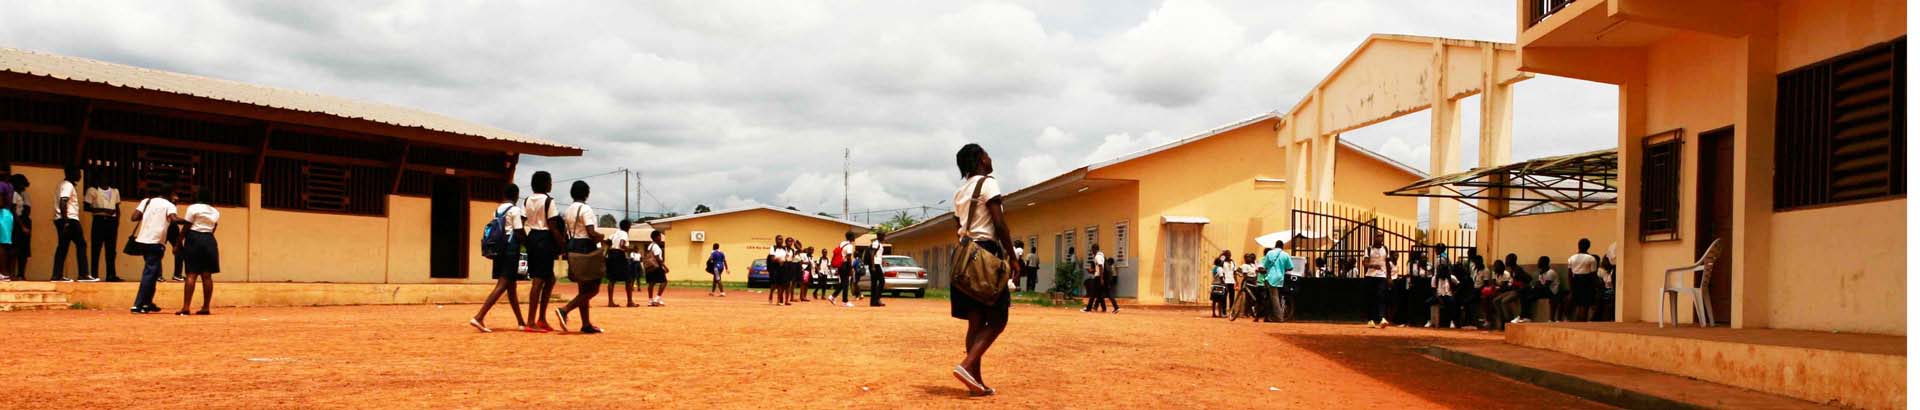 image of a school in Gabon